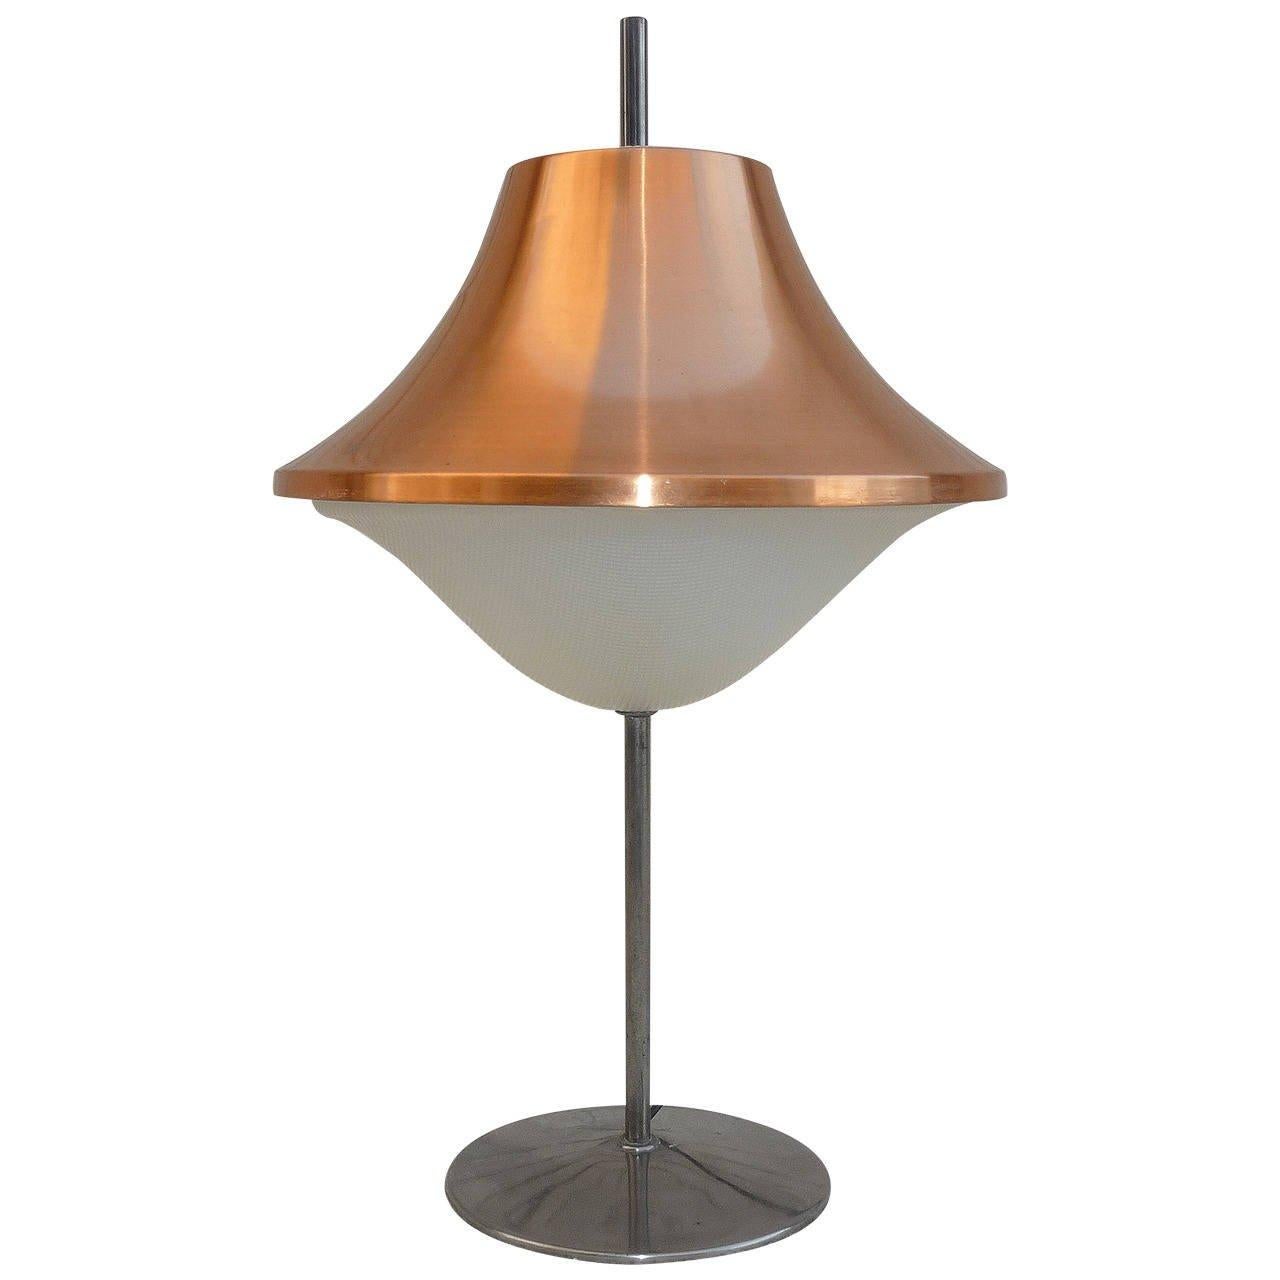 Italian Table Lamp after Stilnovo